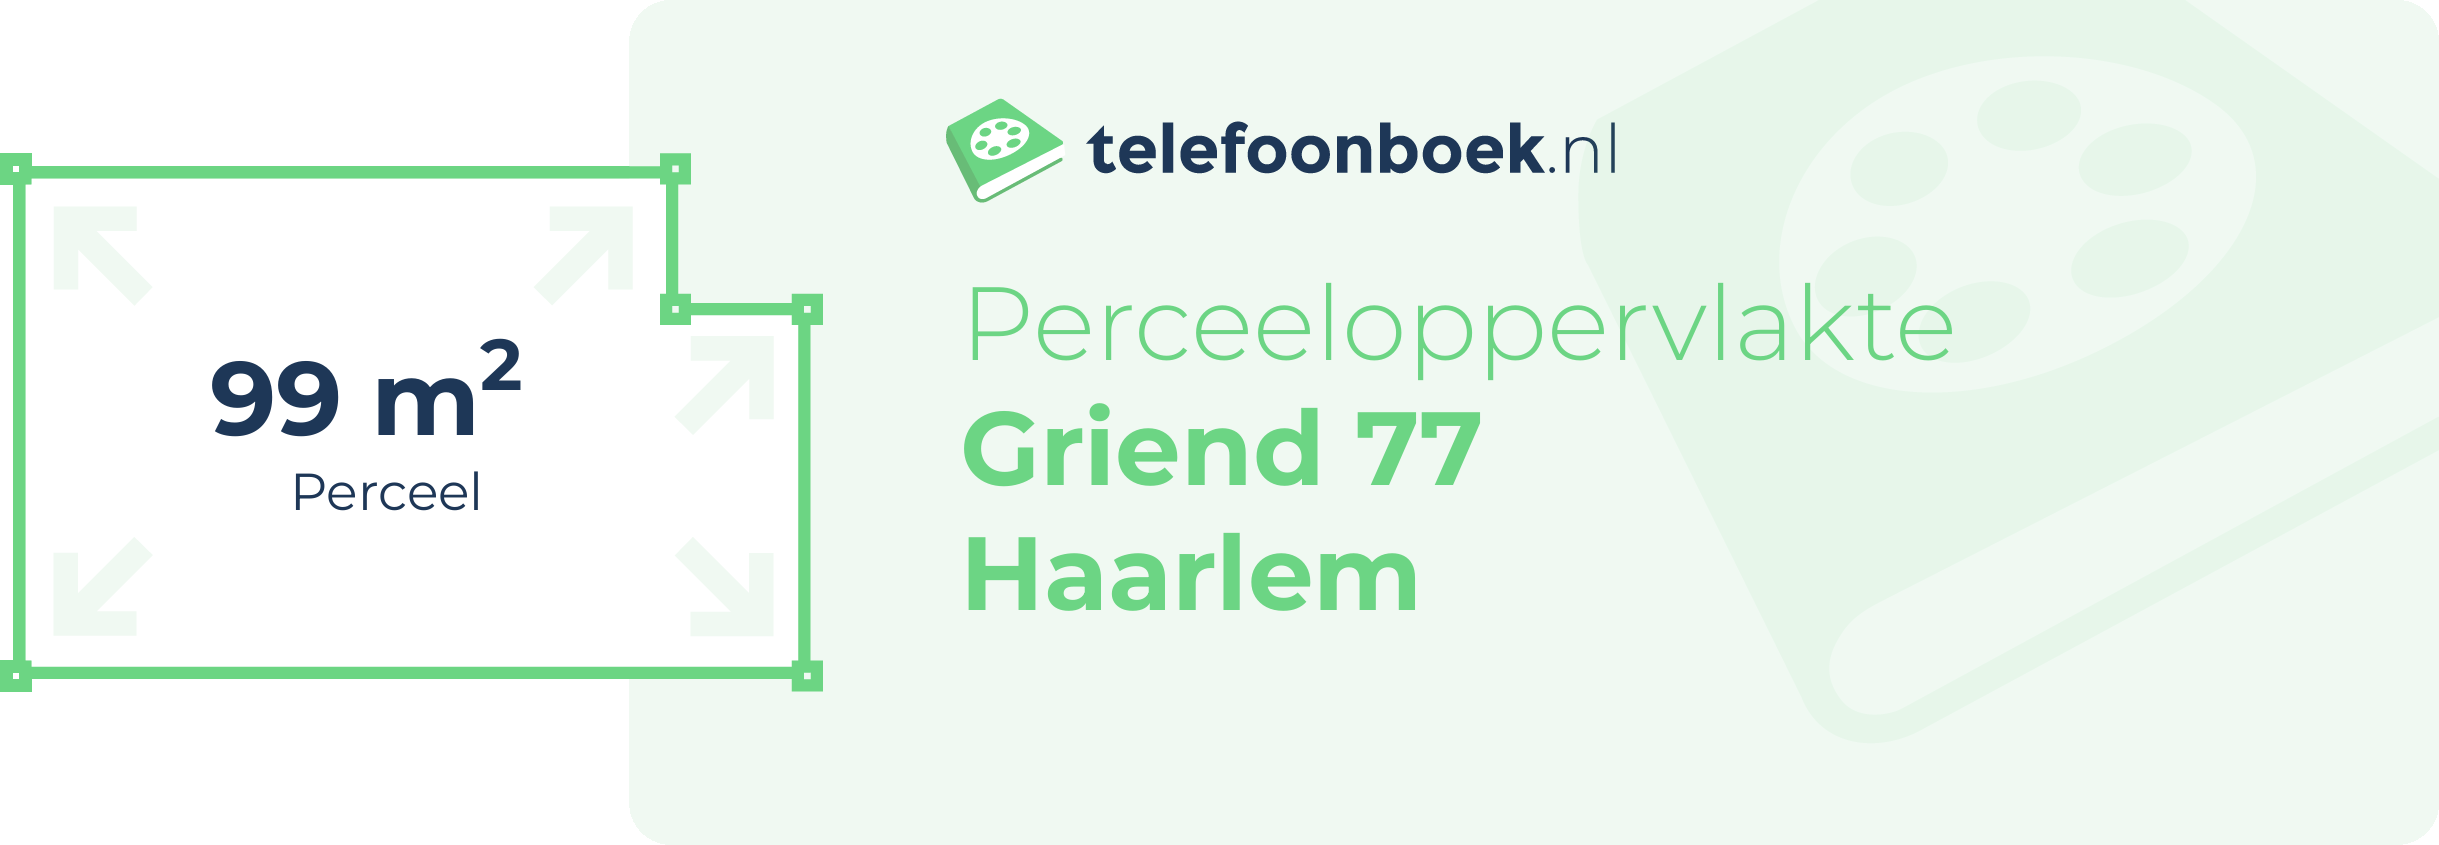 Perceeloppervlakte Griend 77 Haarlem